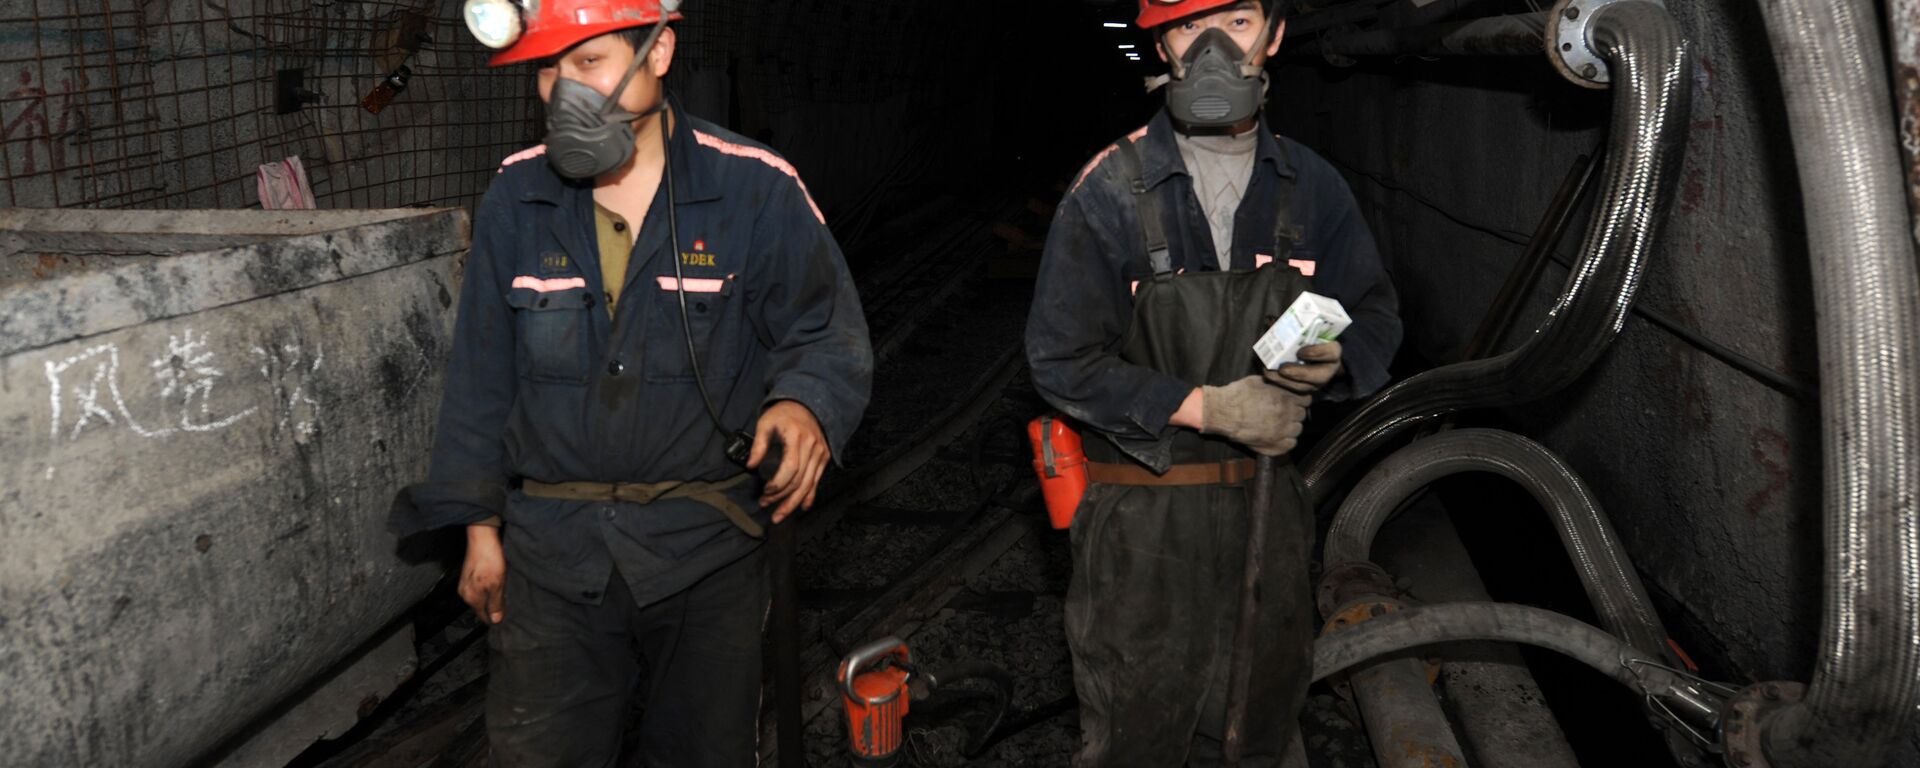 Laborers working at a coal mining facility  - Sputnik International, 1920, 19.08.2021